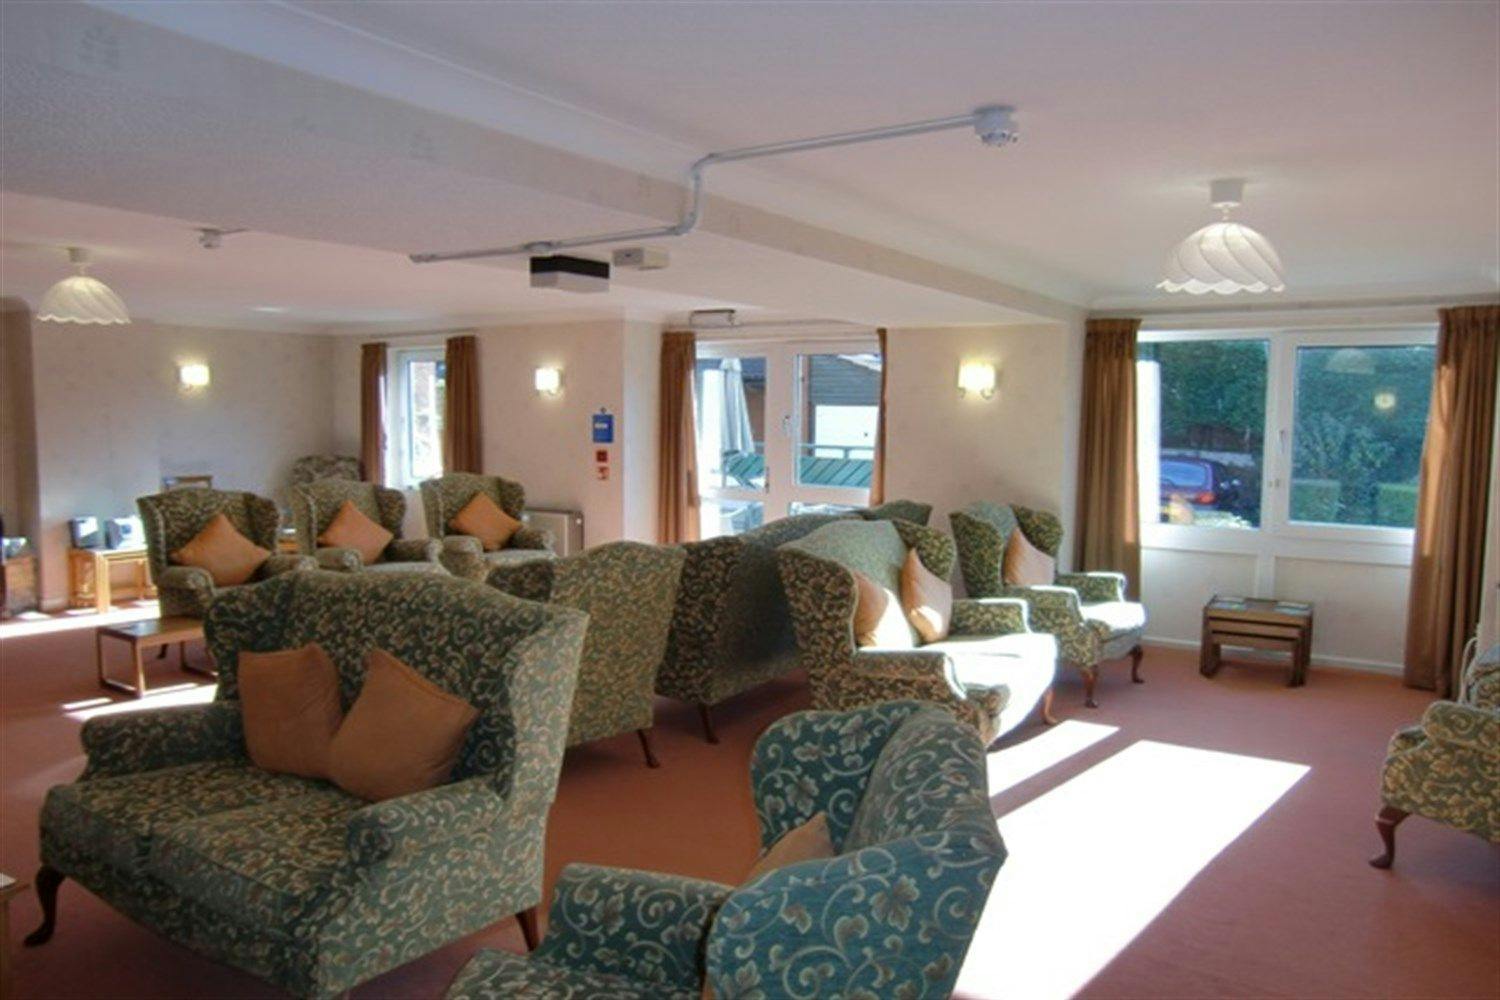 Communal Lounge at Homebank House Retirement Development in Birkenhead, Merseyside 